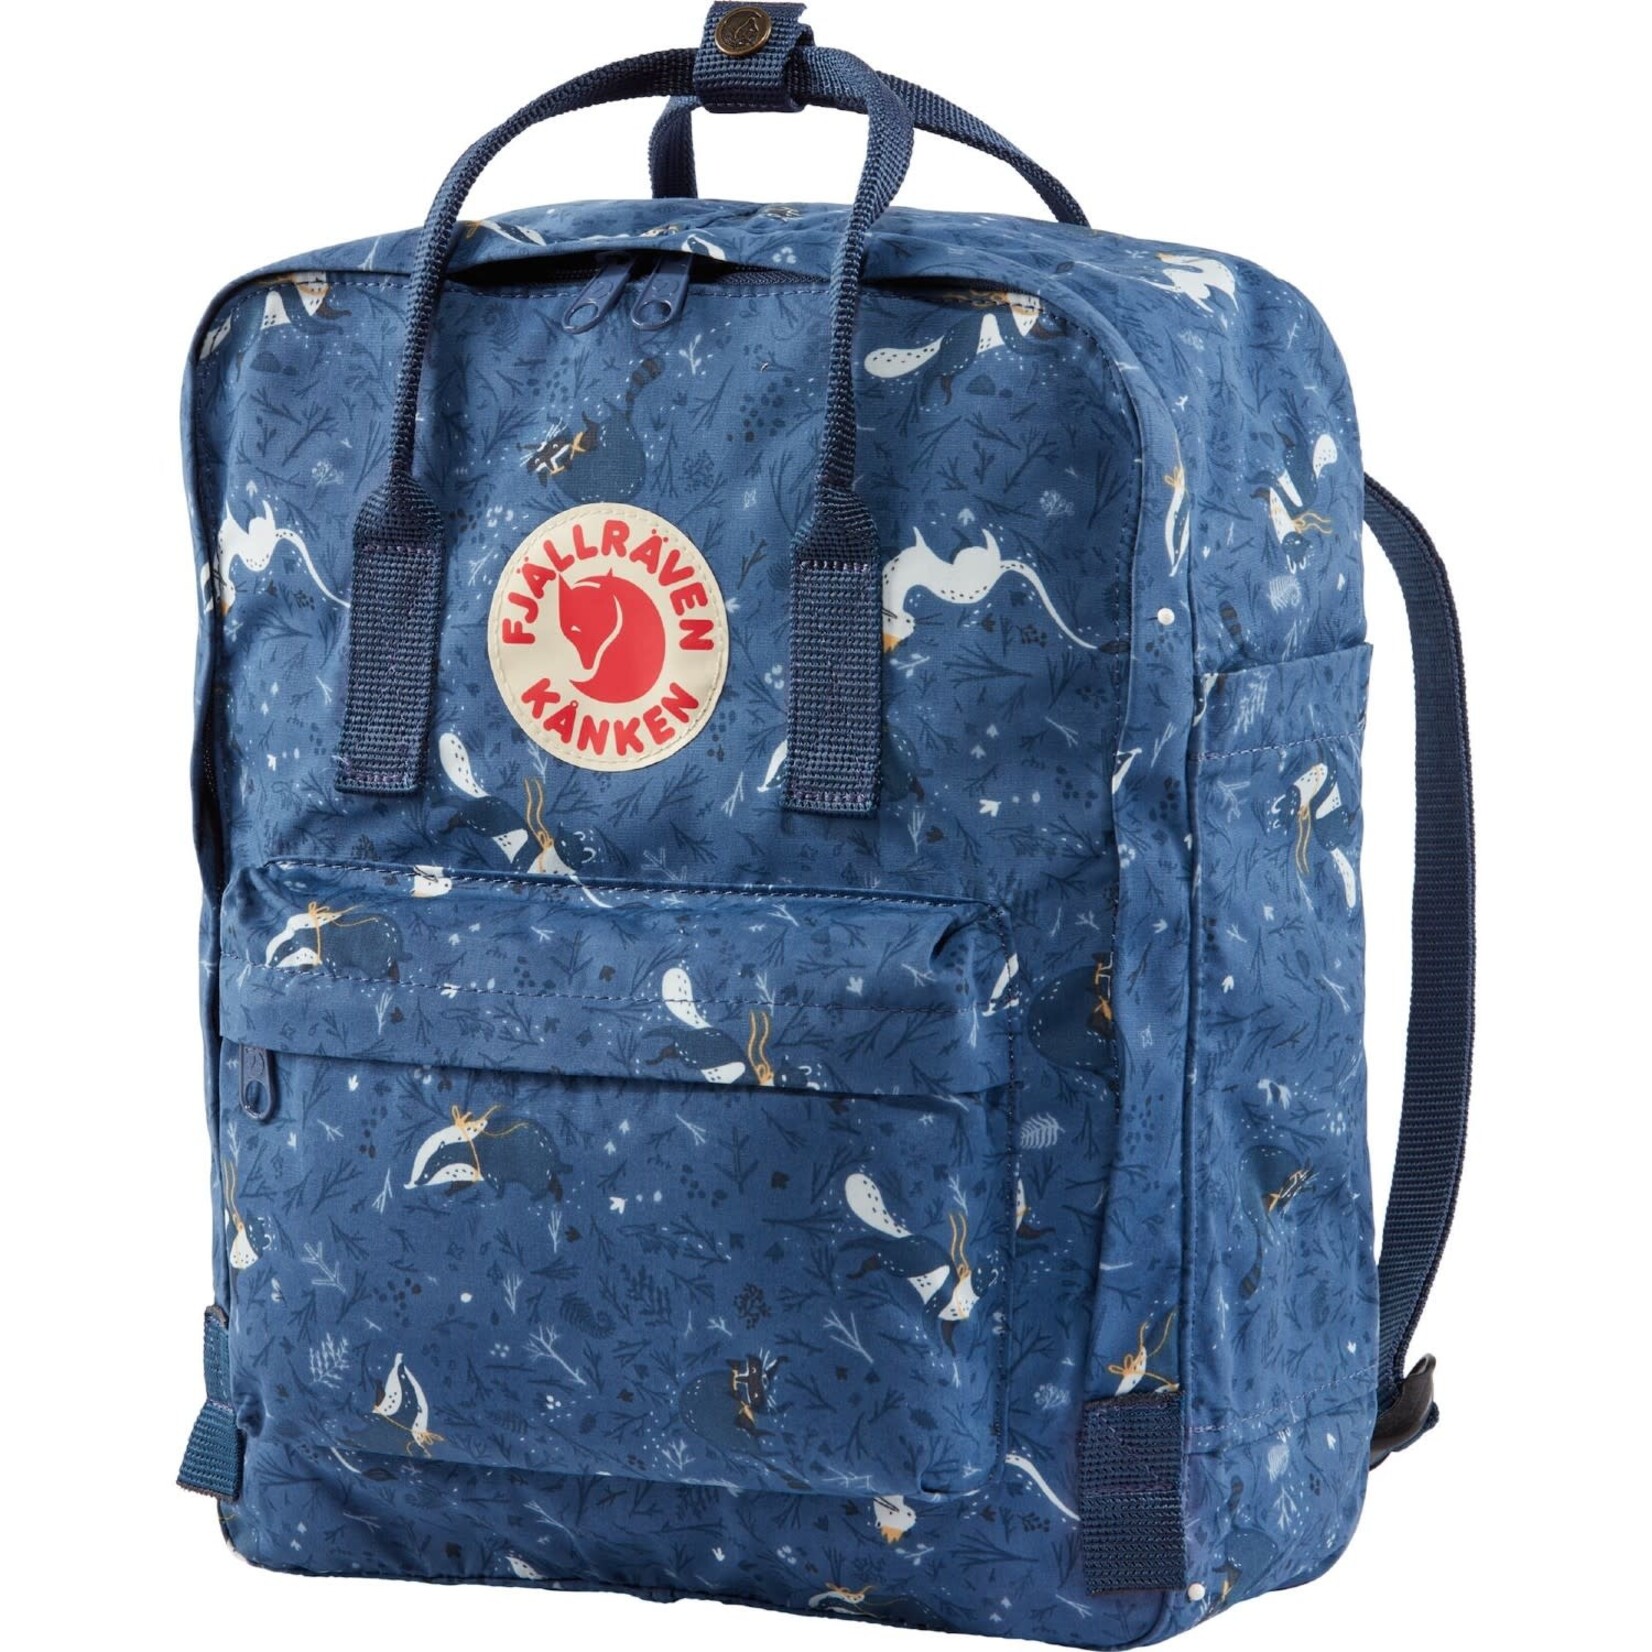 Shop the Official Kanken Backpack Collection